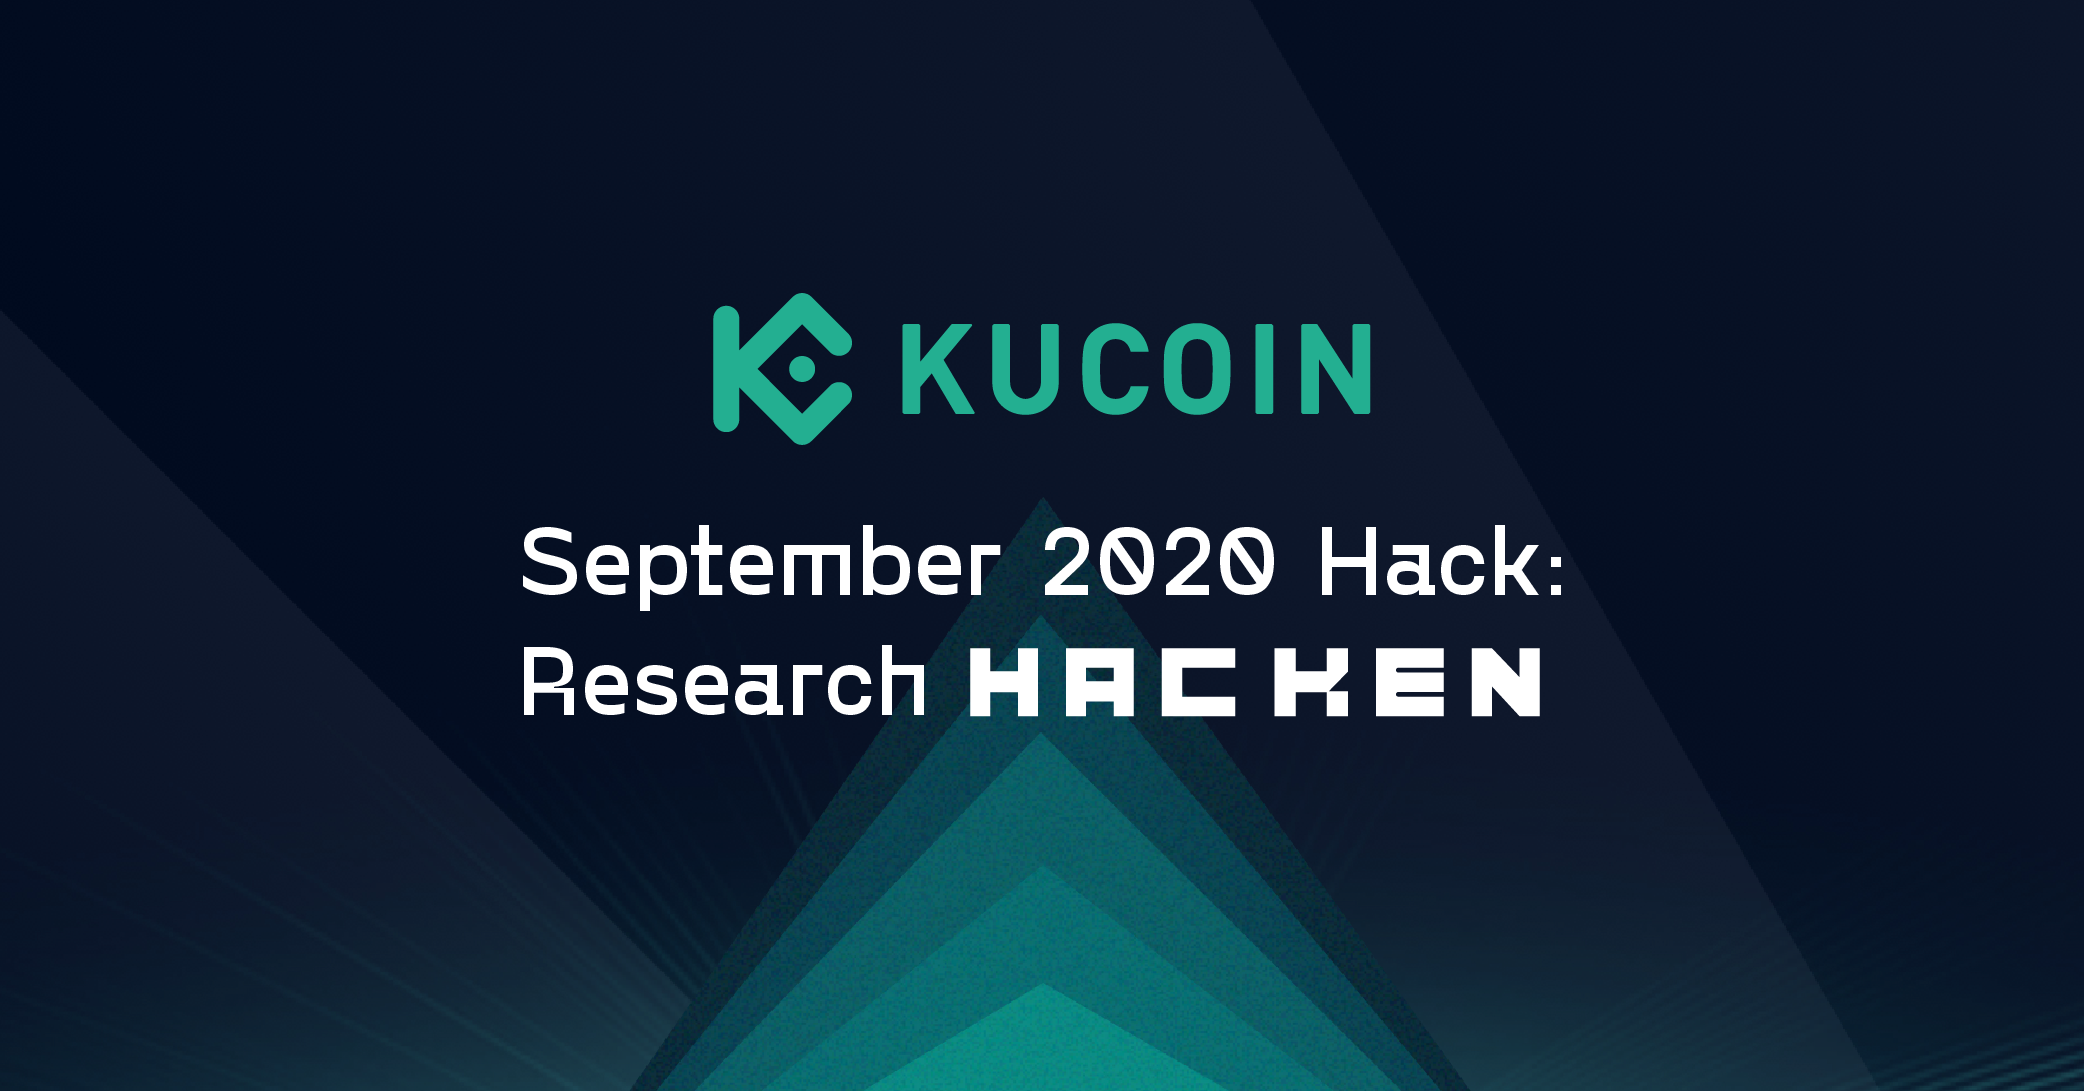 KuCoin September 2020 Hack: Hacken Research